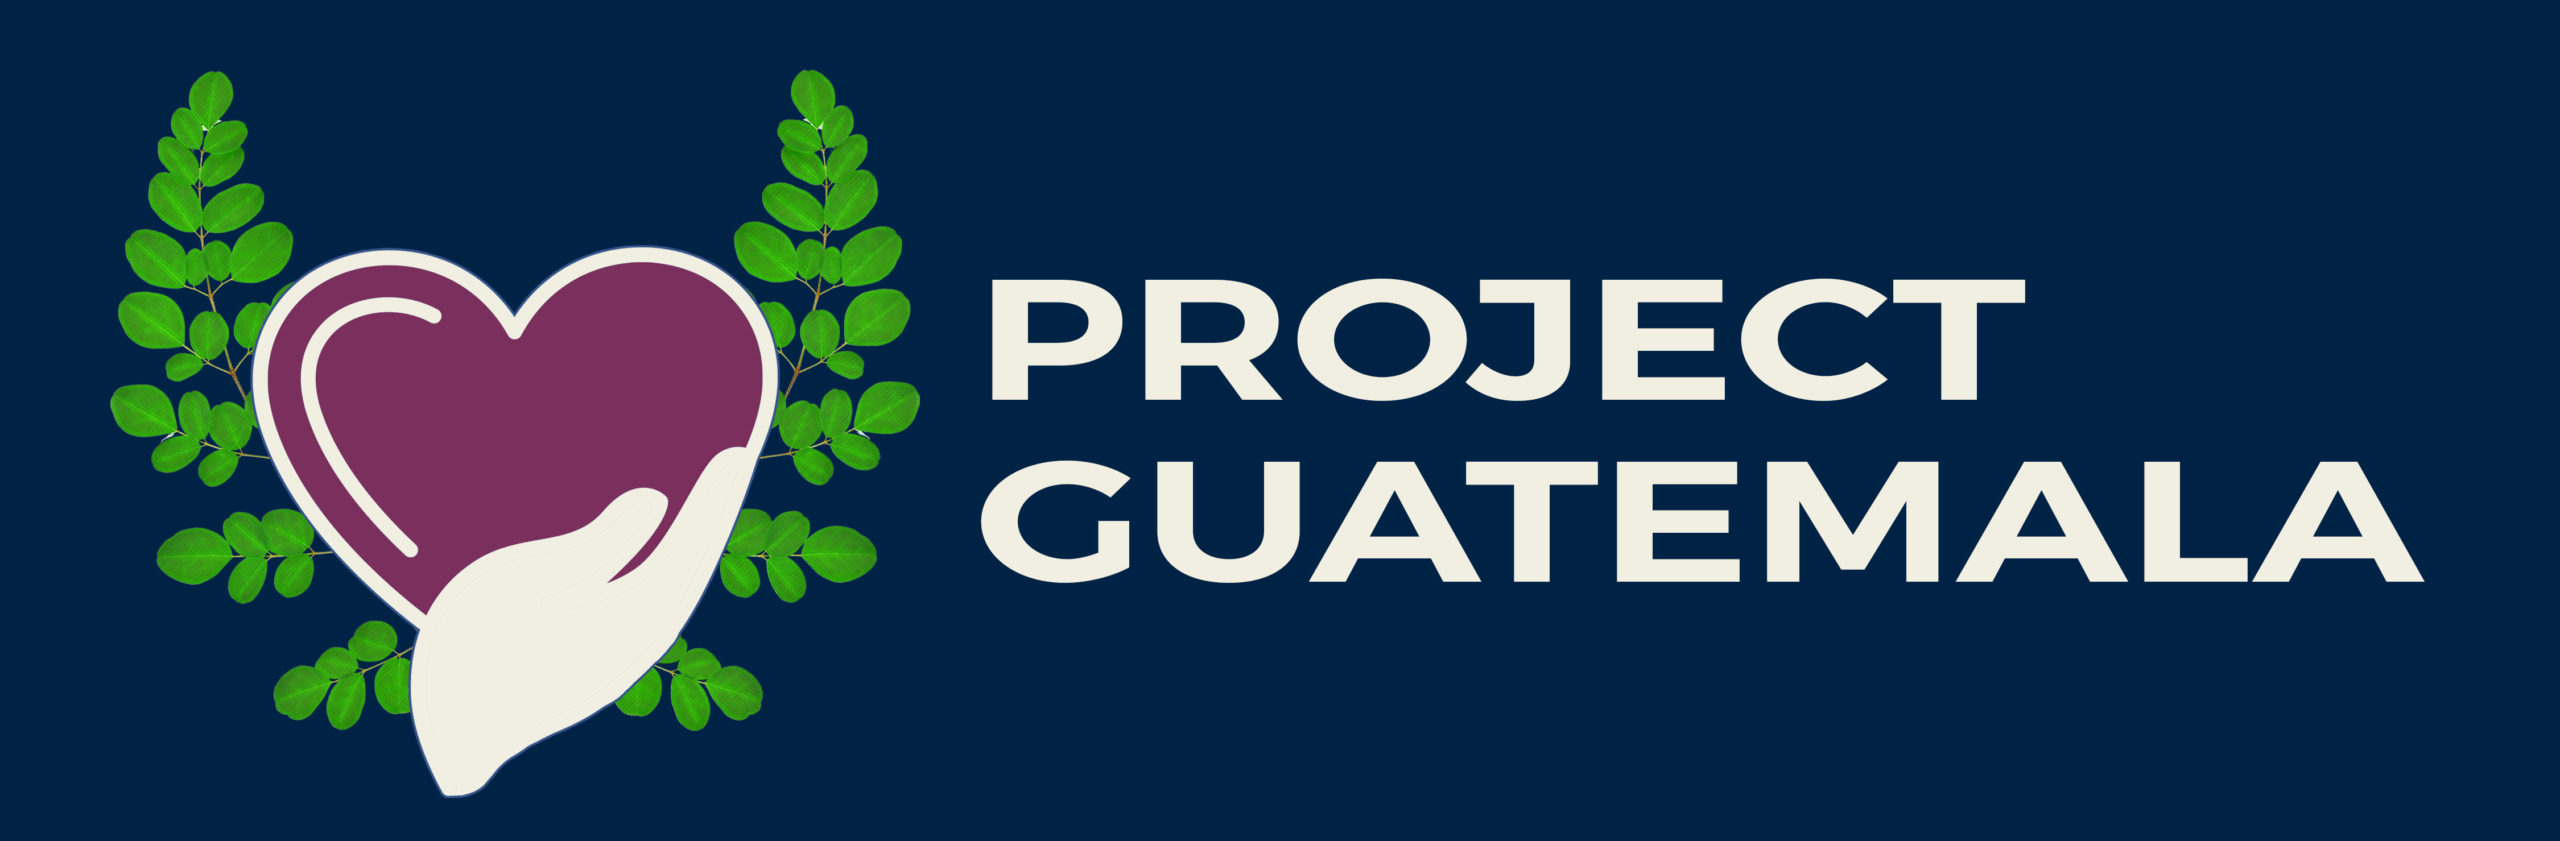 Project Guatemala dark